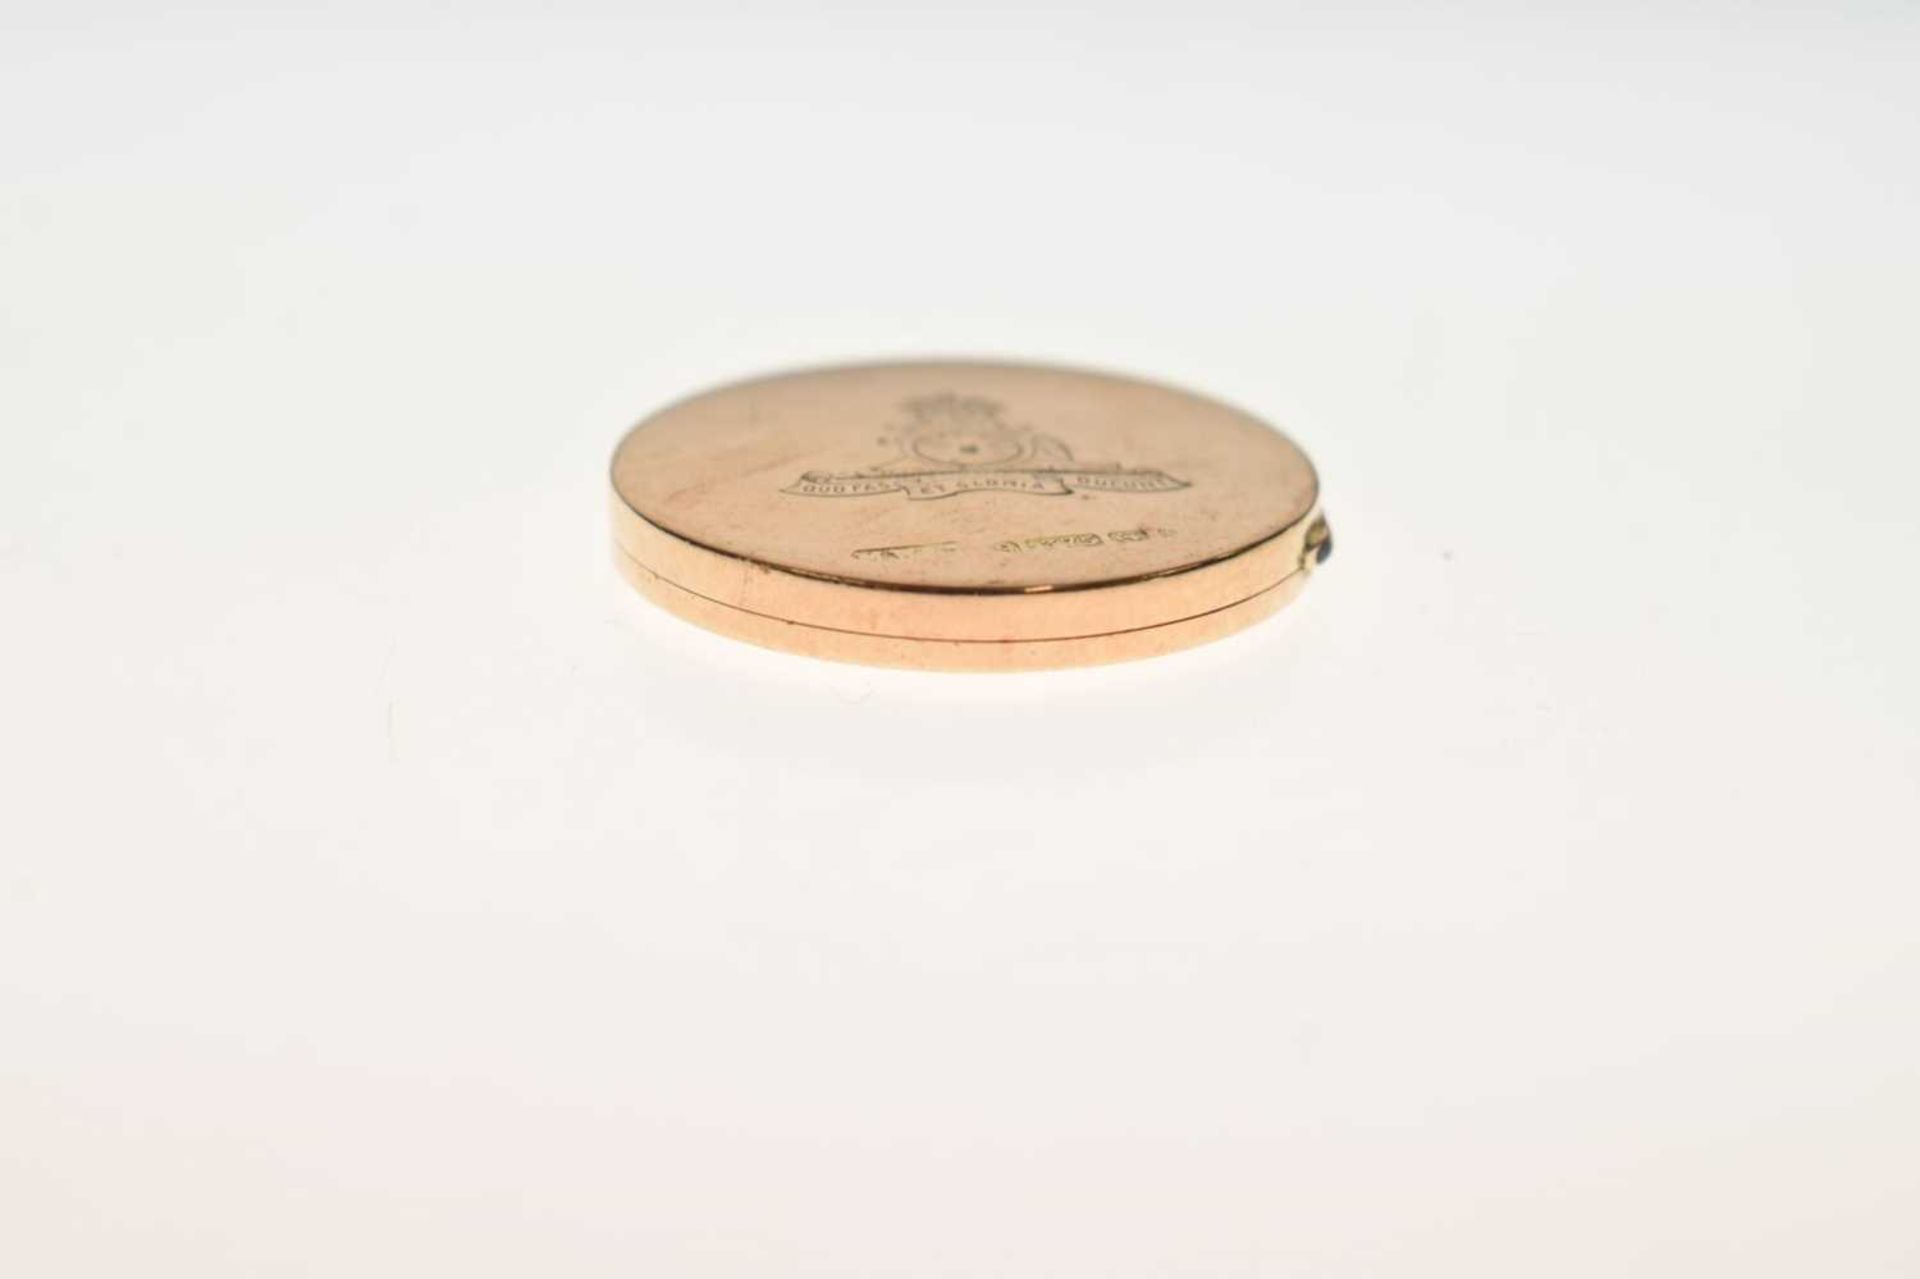 Royal Artillery 9ct gold circular locket - Image 4 of 9